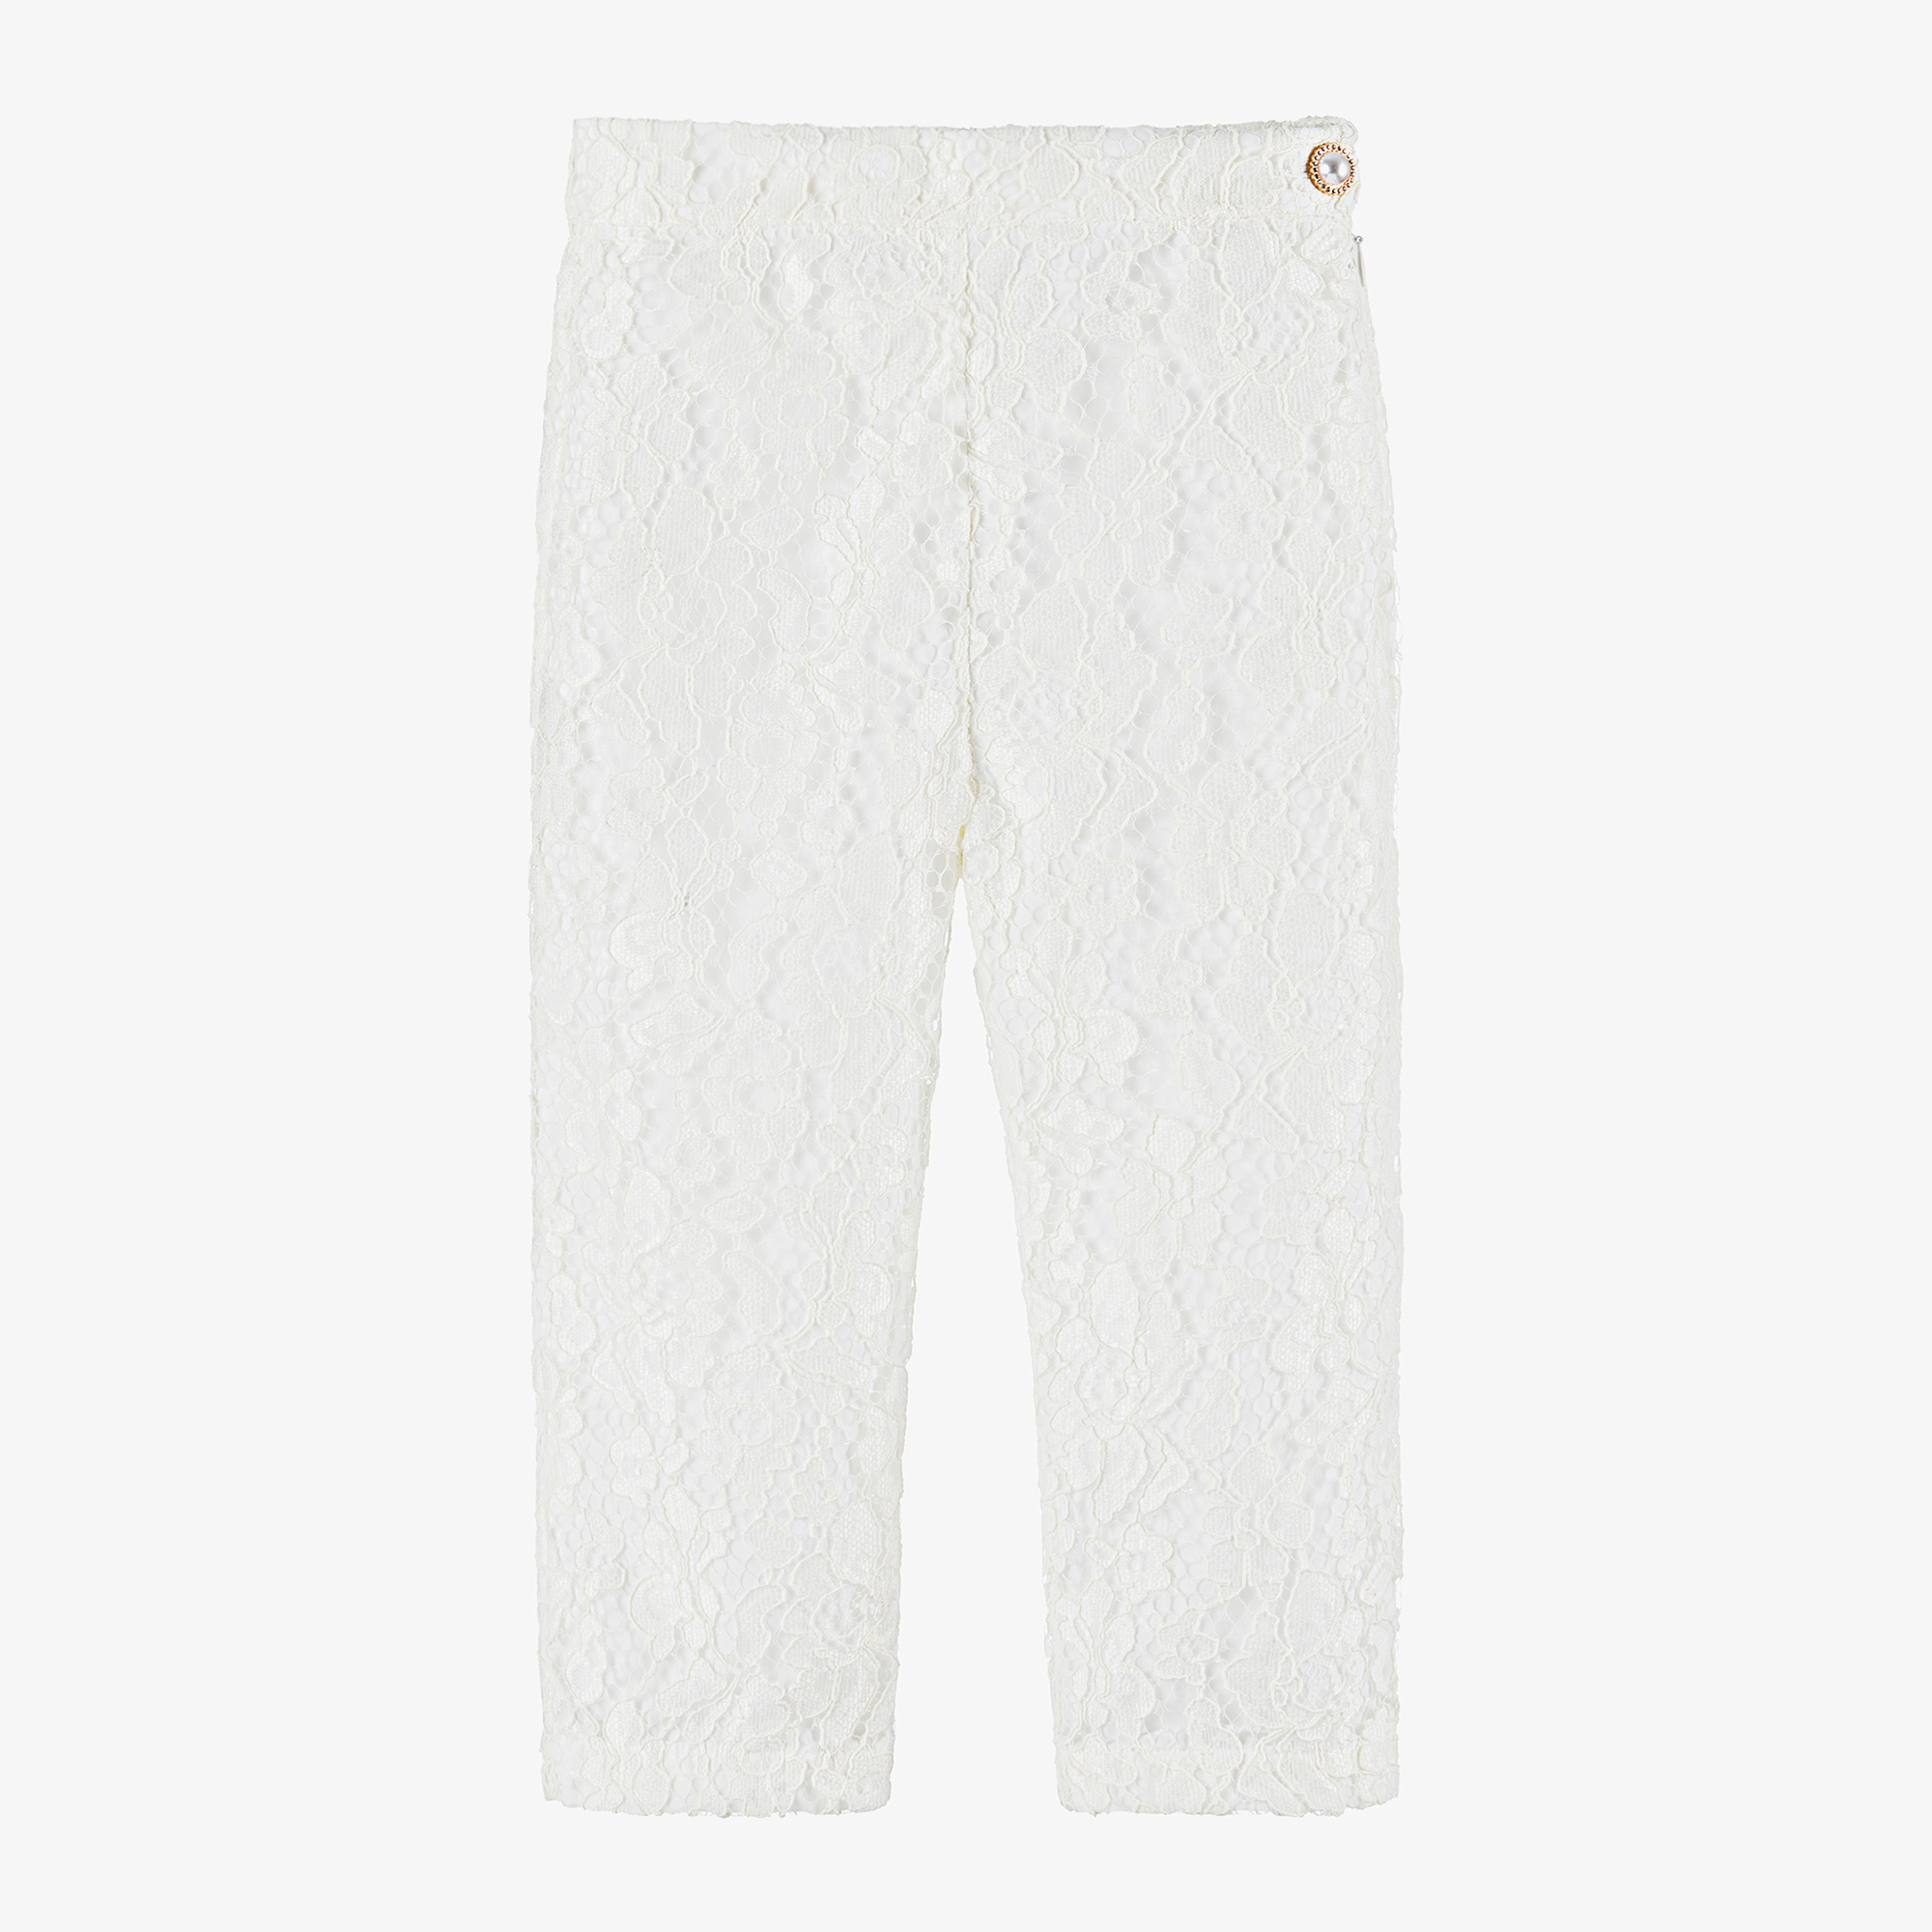 Lace trousers | Lindex Poland